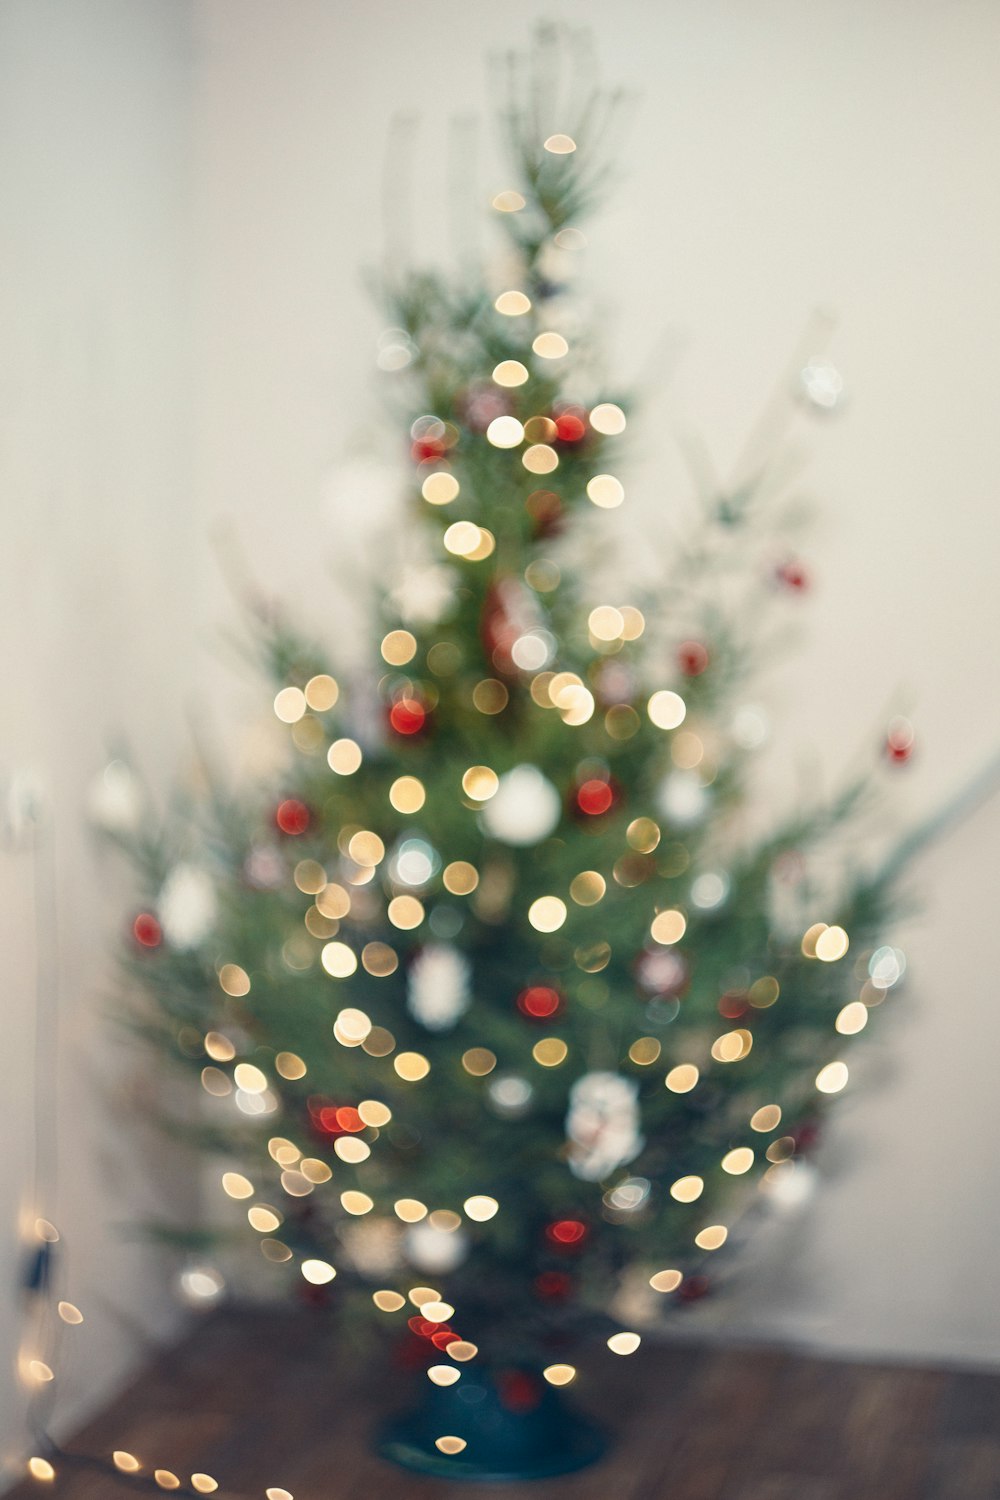 lighted Christmas tree